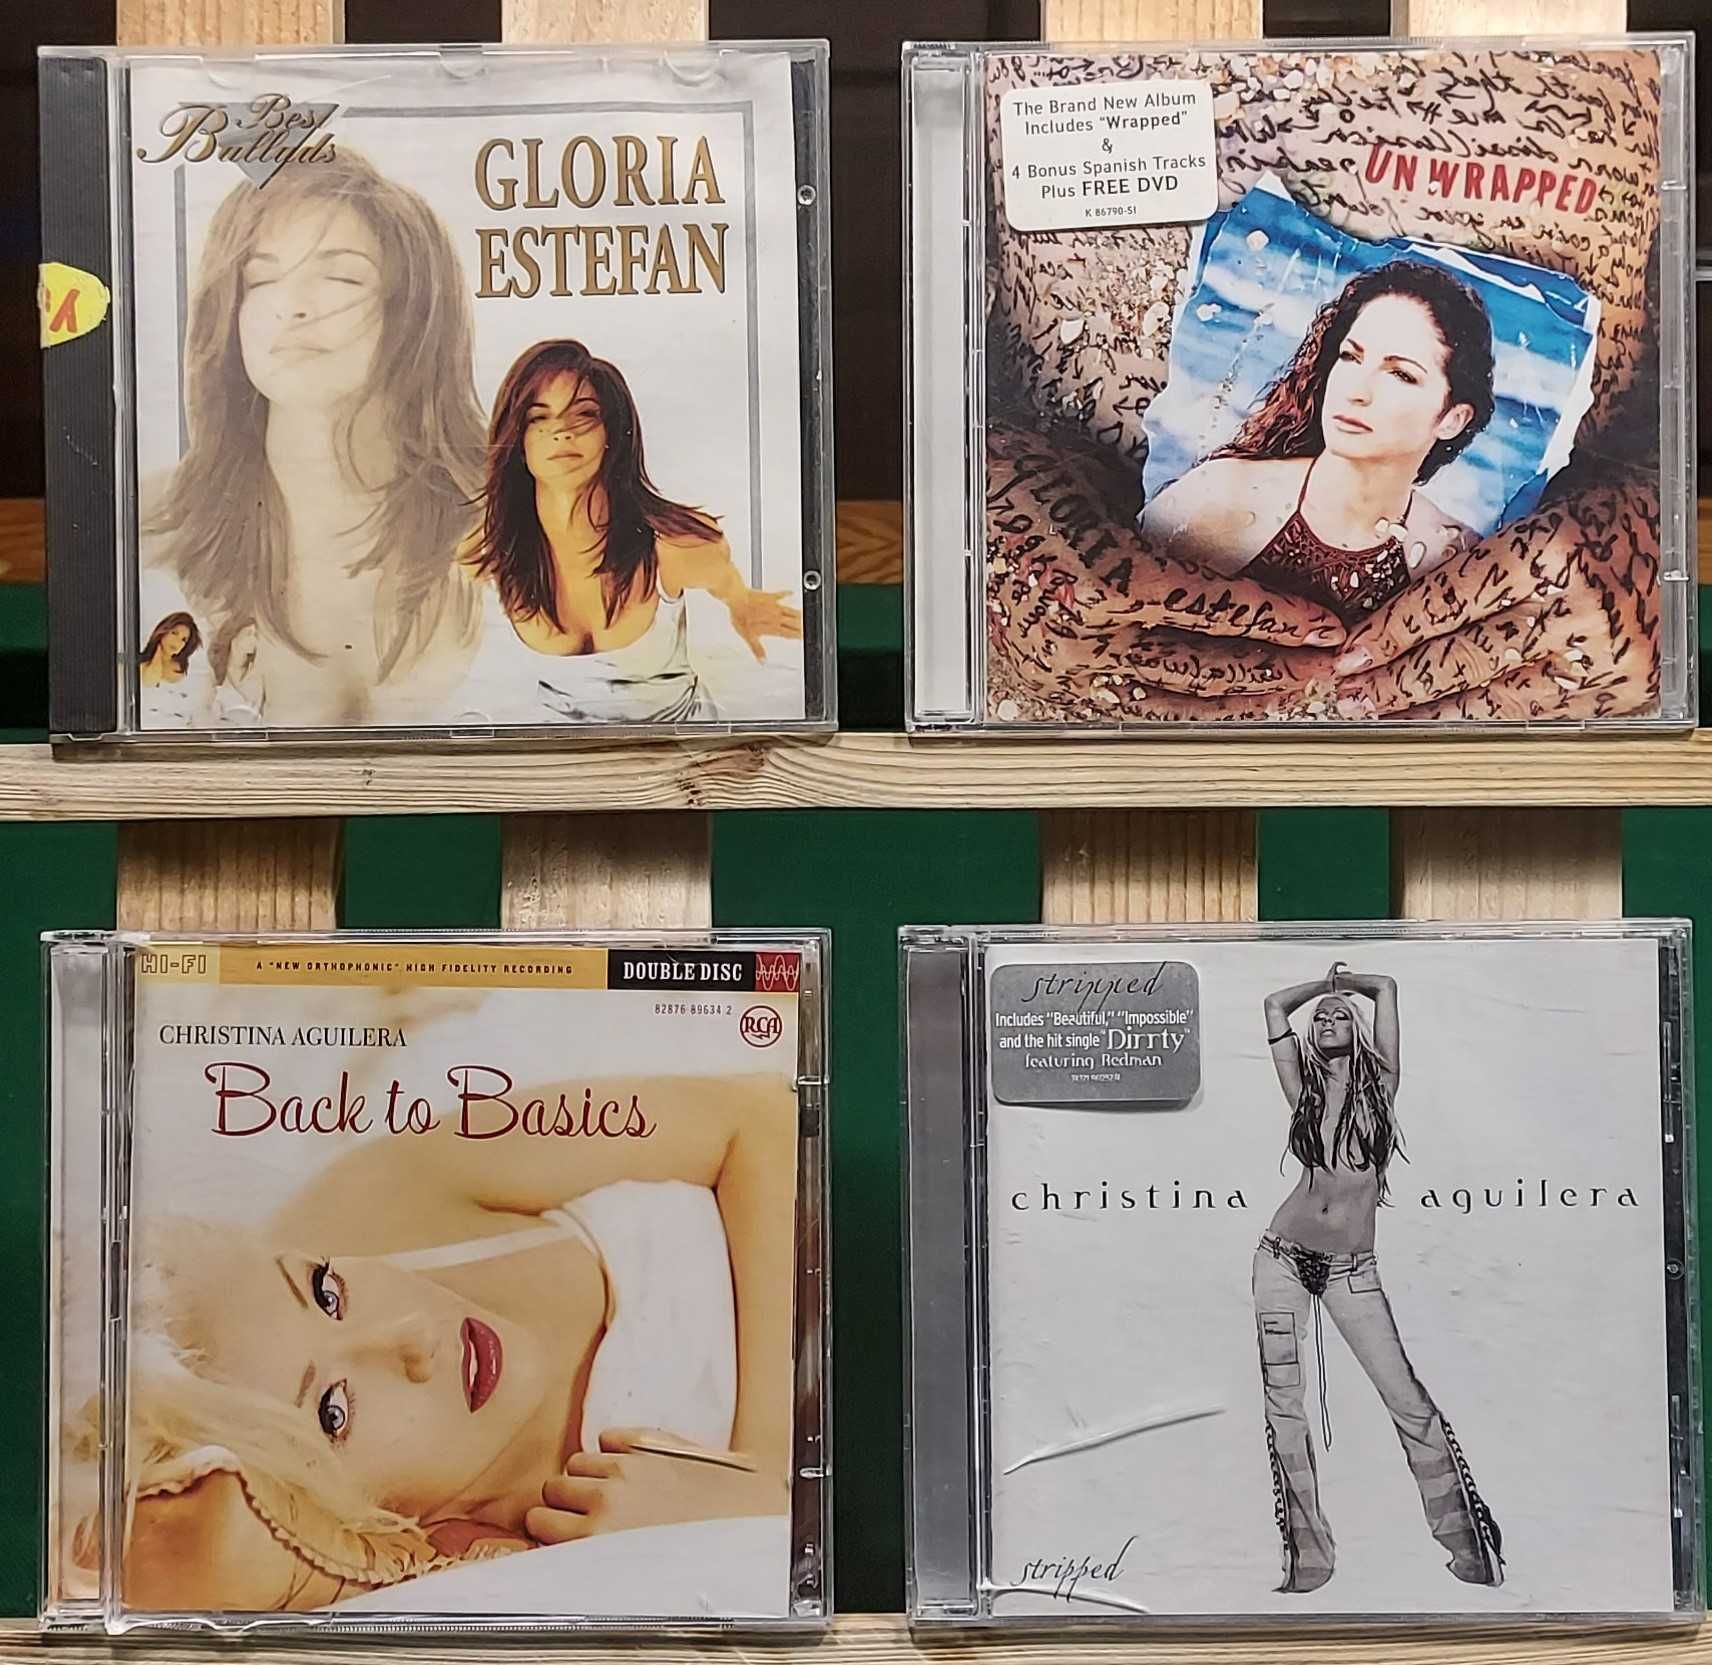 CD - Anie Lenox, Amy Winehouse, Lady Gaga, B.Carlisle i inni